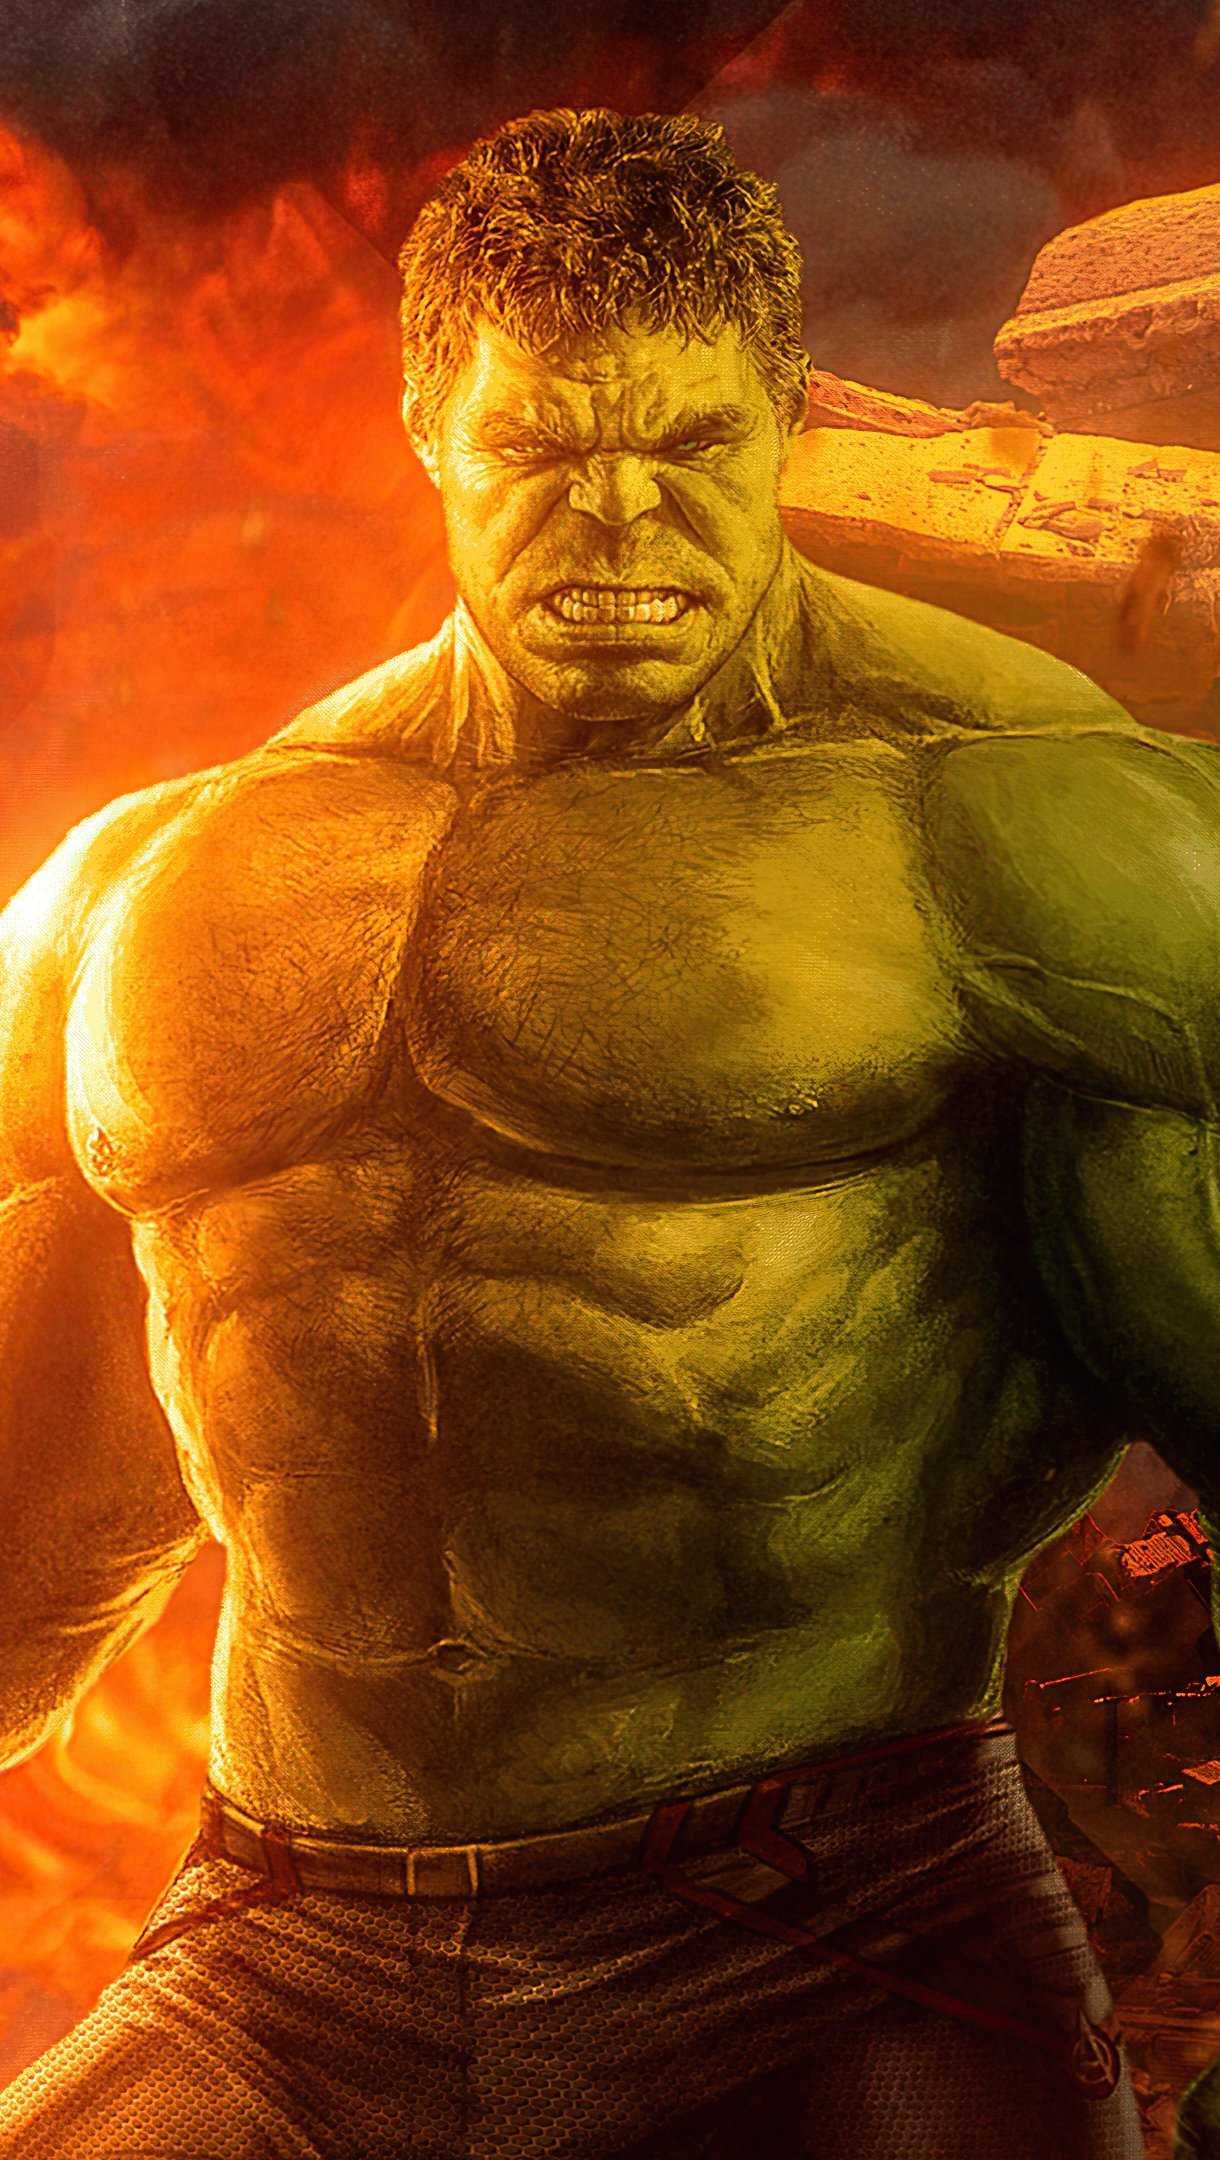 Angry Hulk Artwork Wallpaper Download | MobCup